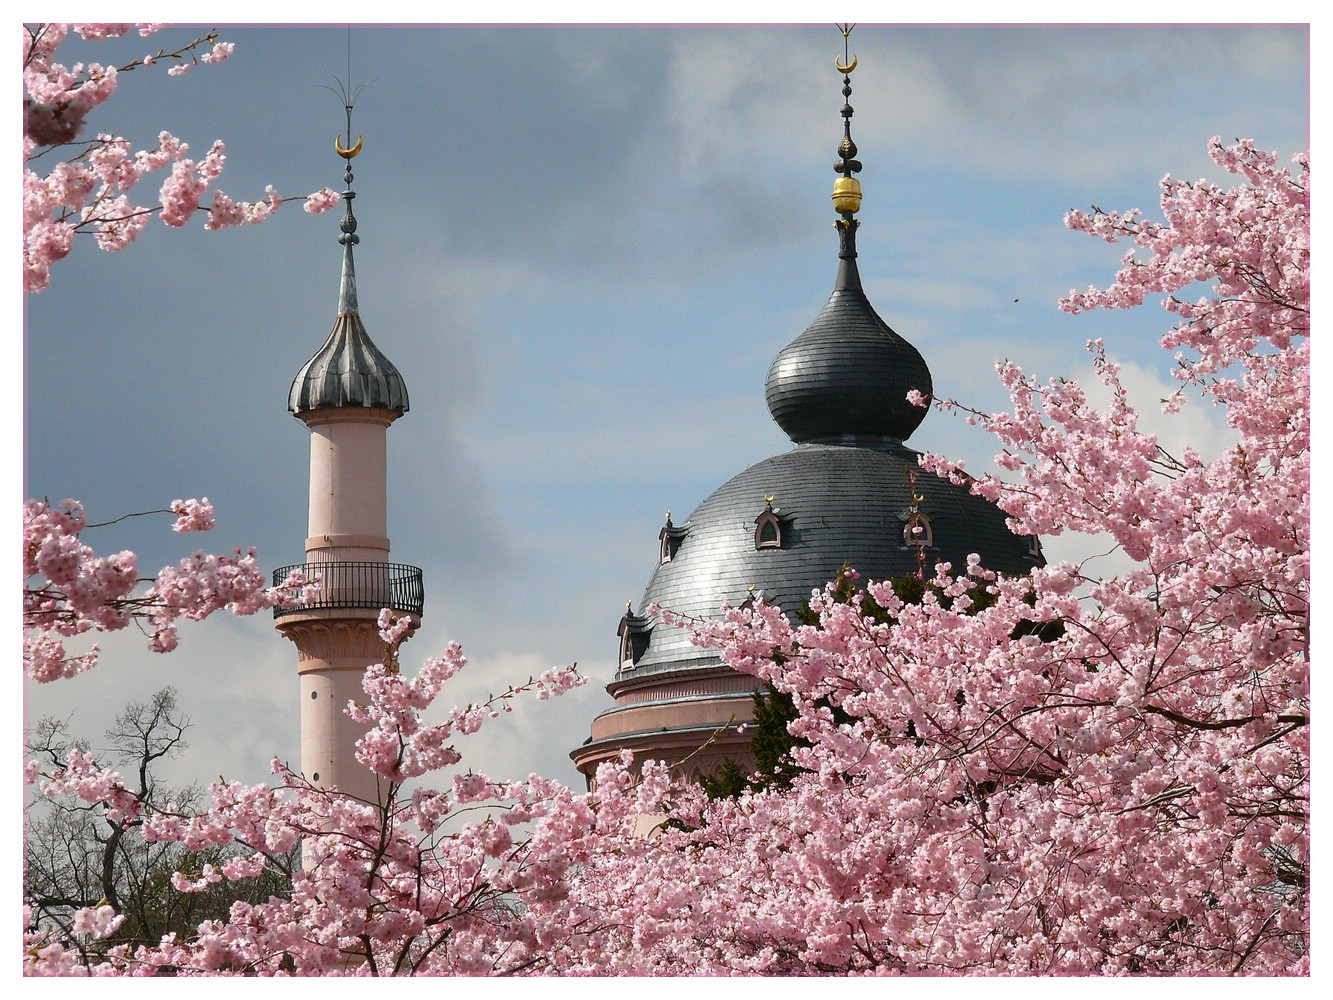 ~ Moschee in rose ~